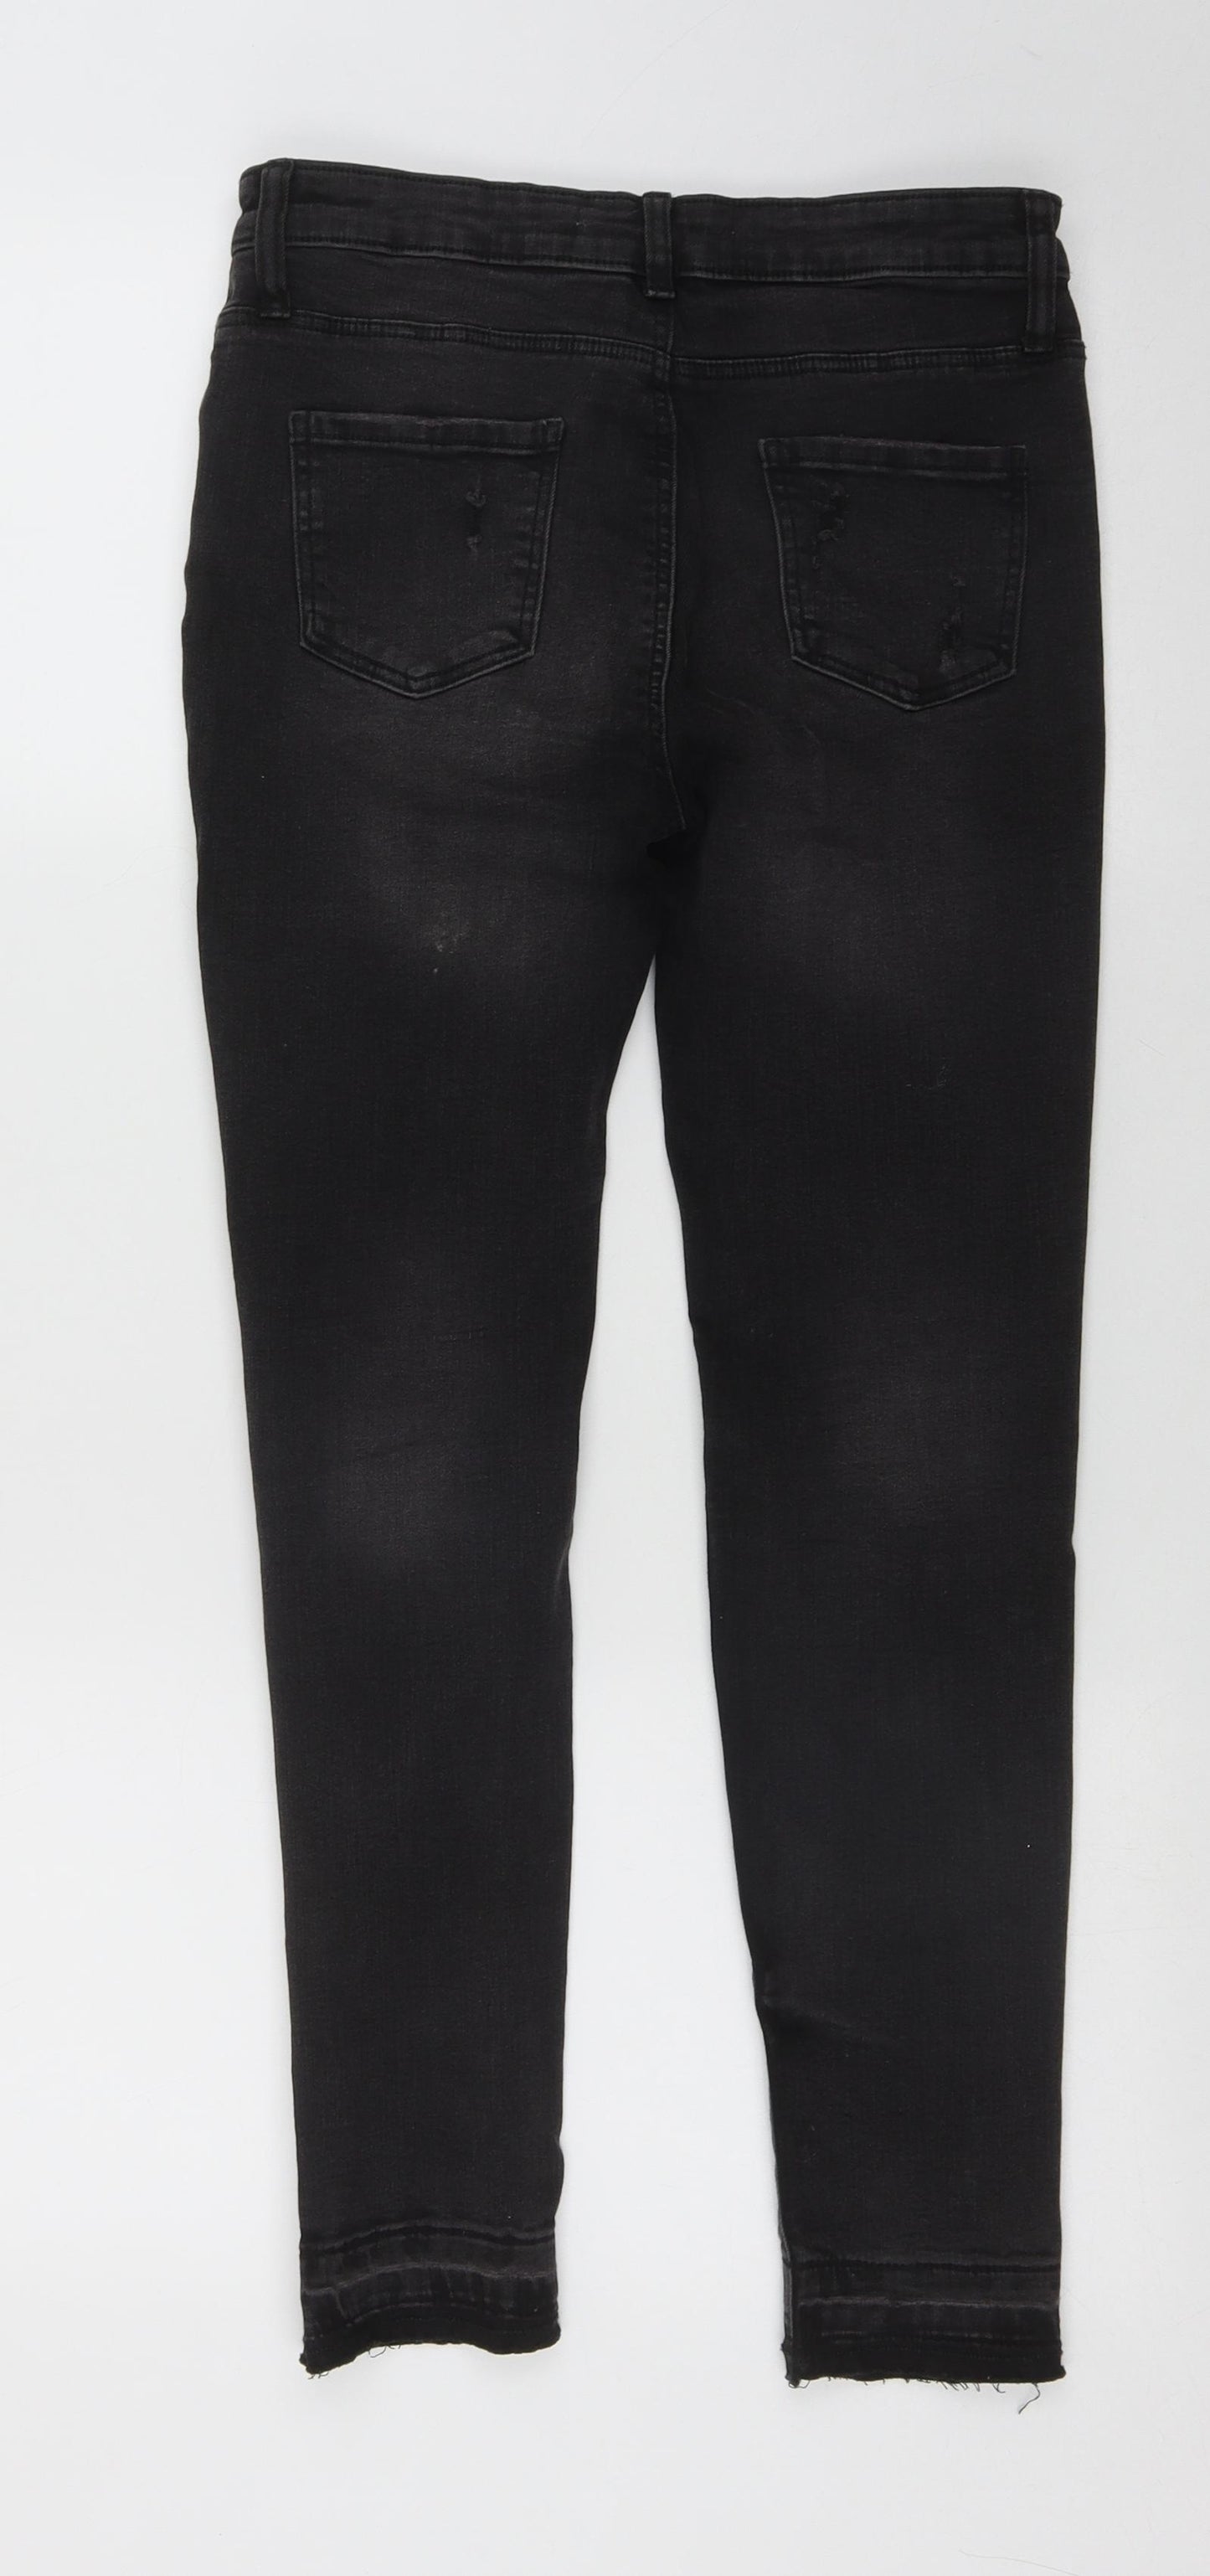 Denium Co Girls Black  Cotton Skinny Jeans Size 12-13 Years L25 in Regular Zip